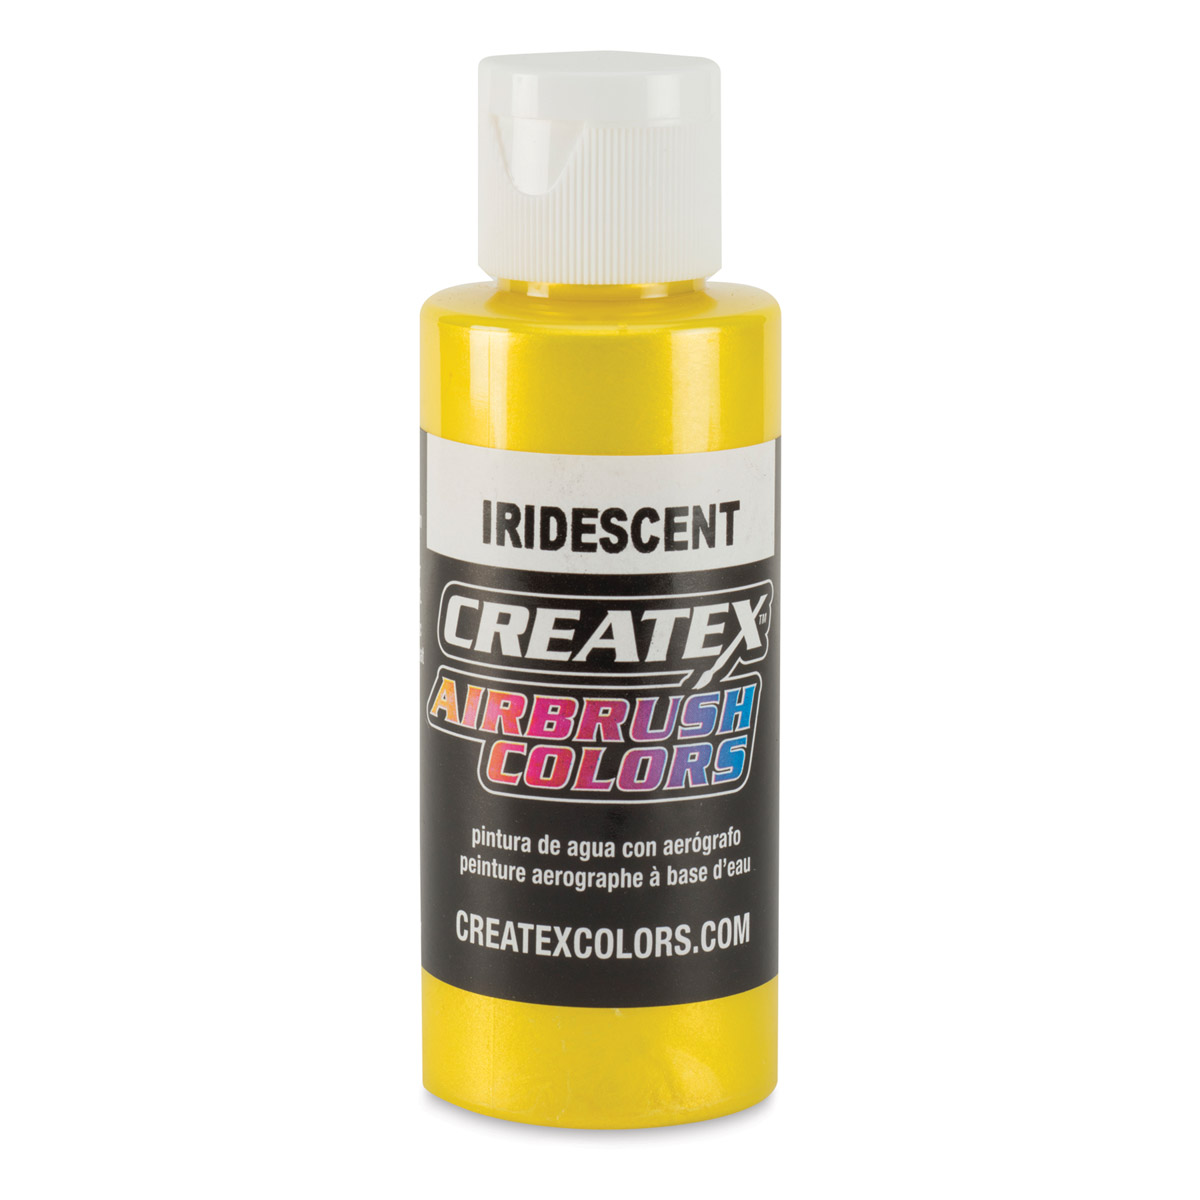 Createx Airbrush Color 2oz - Iridescent Yellow